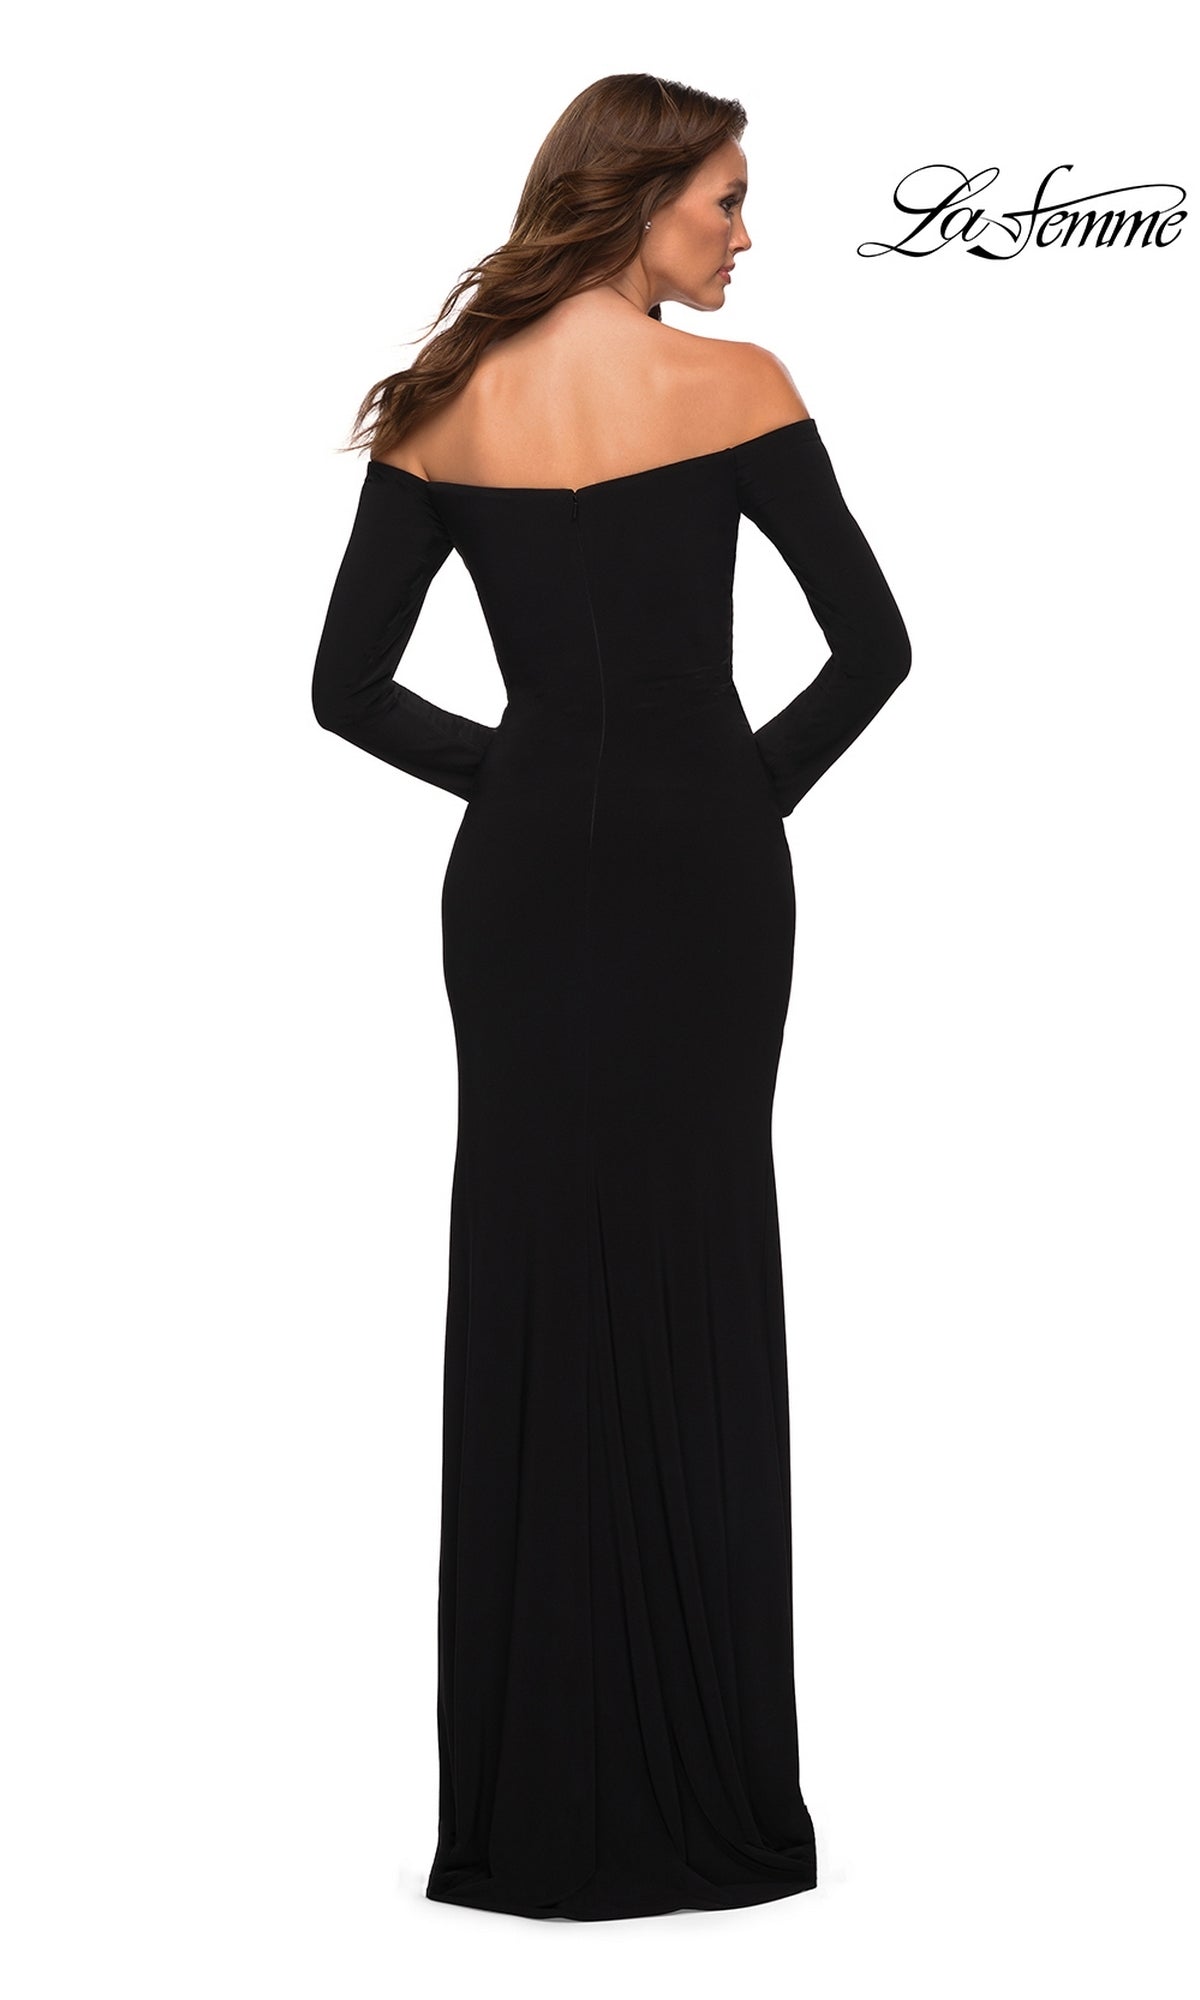  La Femme Long Sleeve Long Black Prom Dress